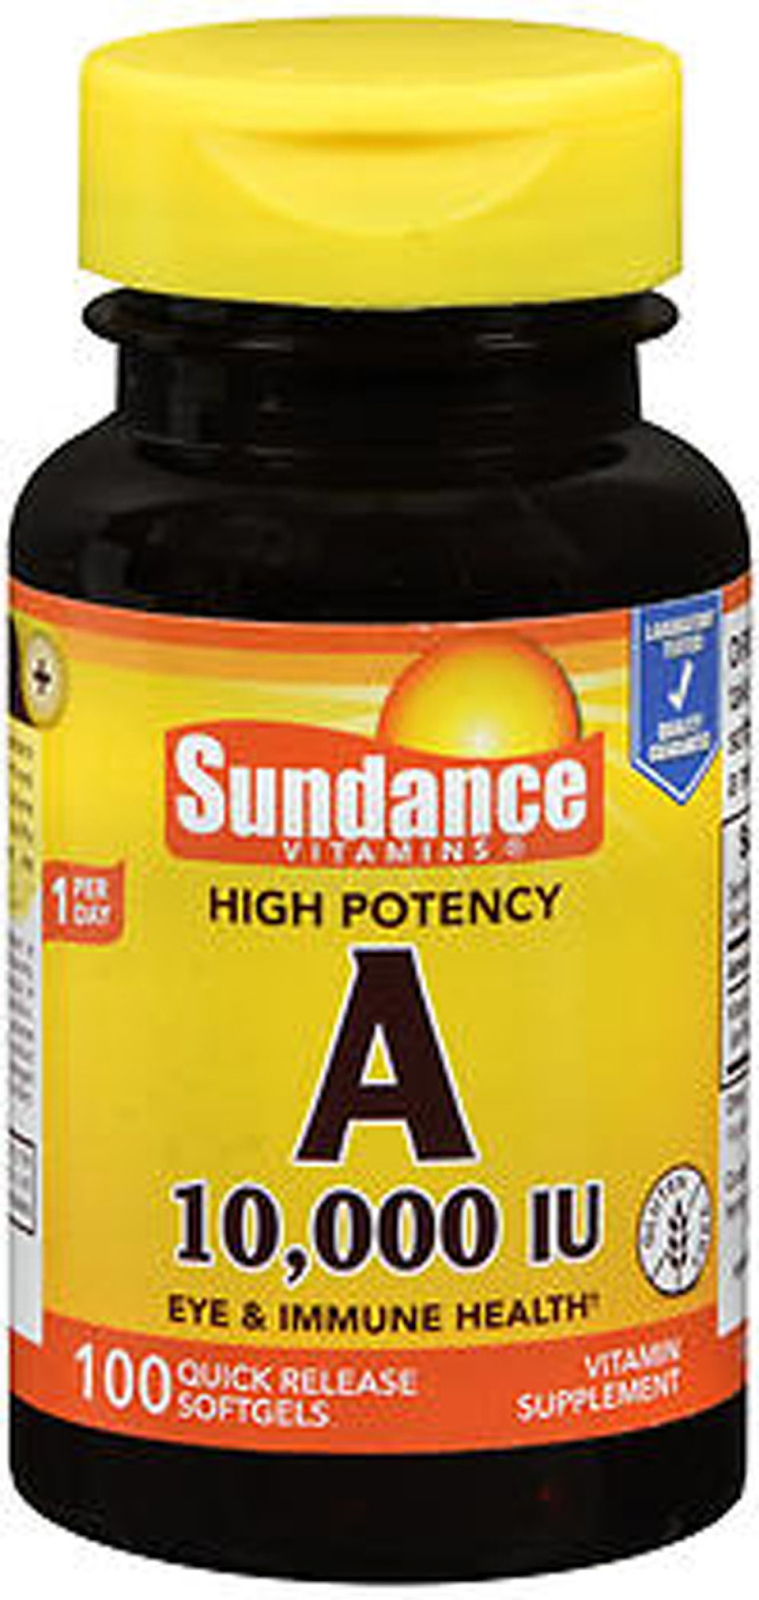 Sundance Vitamins High Potency A 10,000 IU Vitamin Supplement Quick Release Softgels - 100 ct